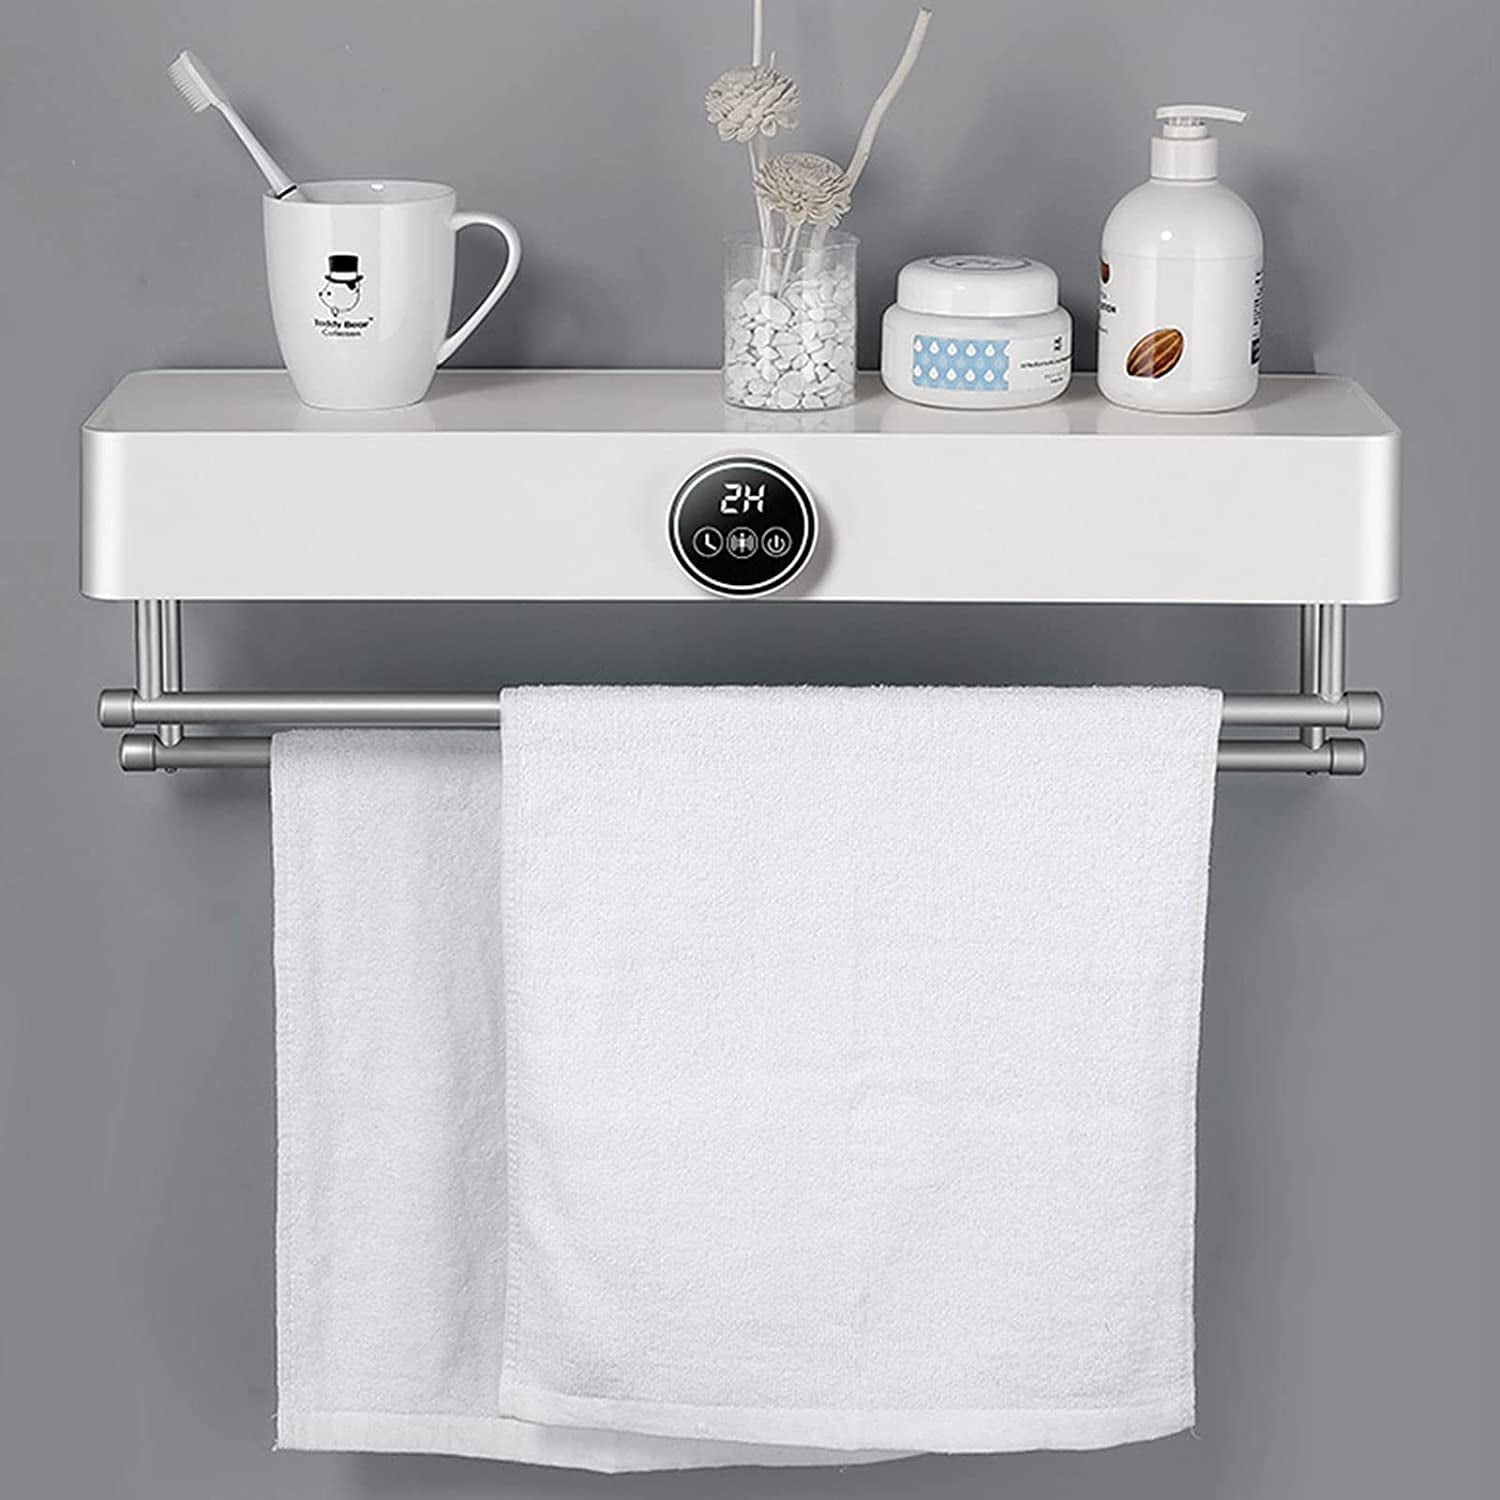 MONIPA Towel Warmers Intelligent Electric Heated Drying Towel Rack